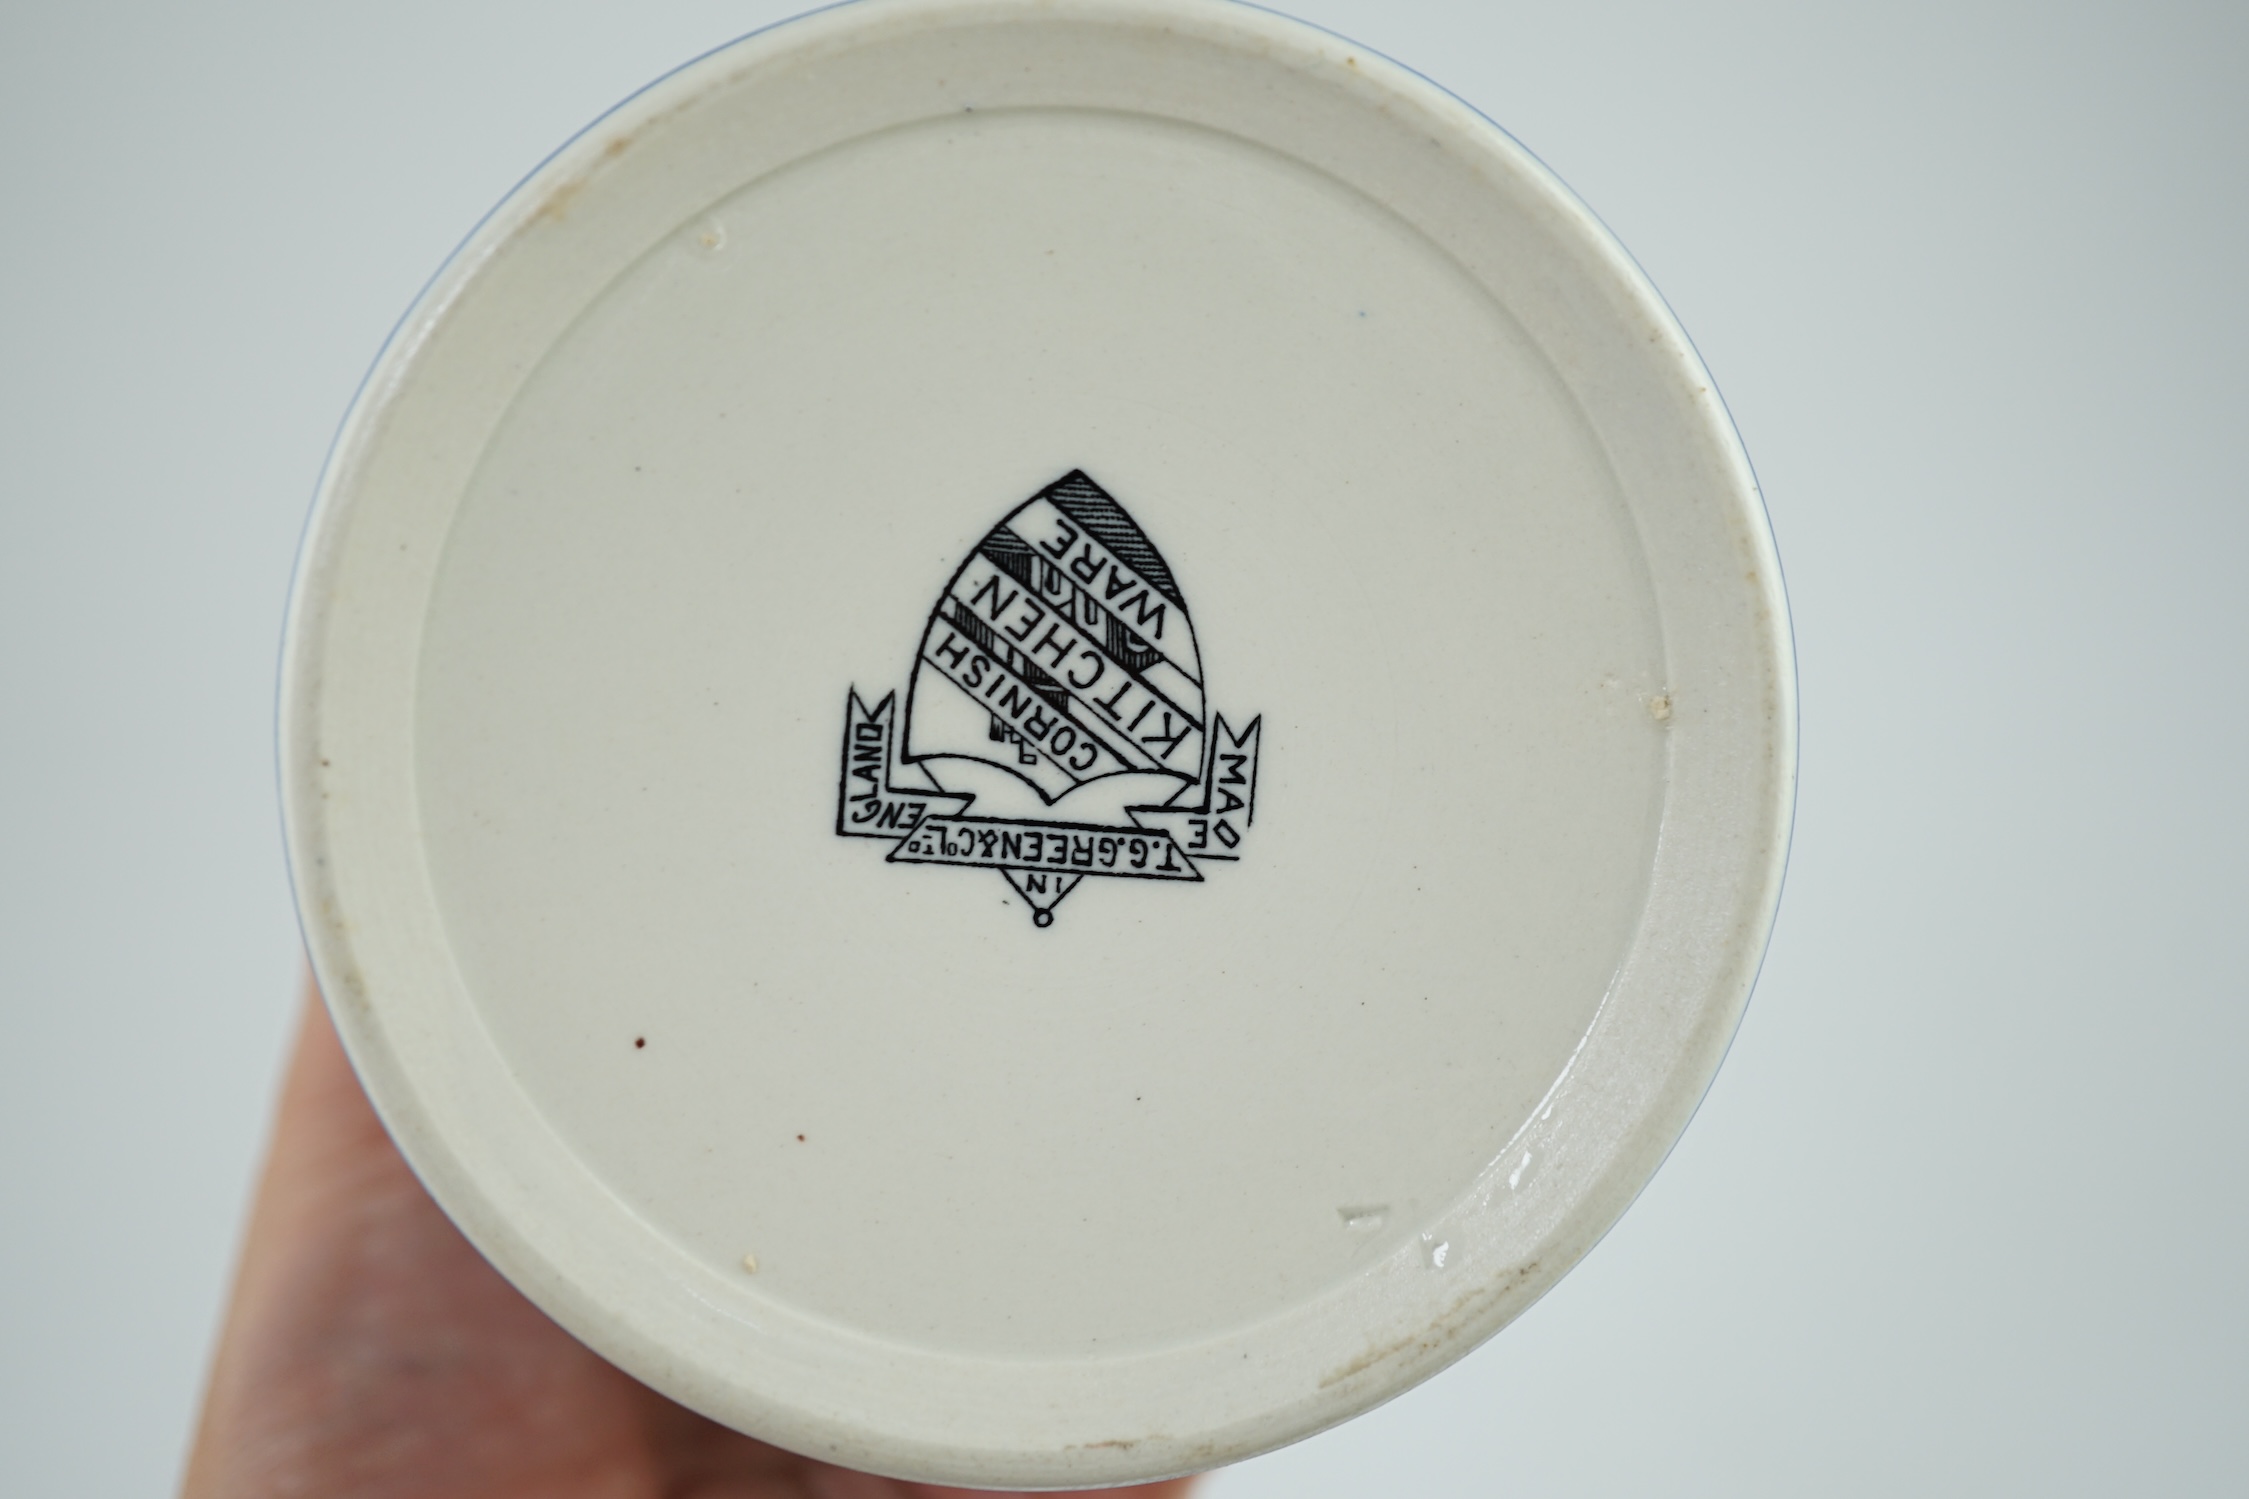 T.G.Green Cornish Kitchenware, a 14cm lidded storage jar, Borax, Black Shield mark. Condition - good